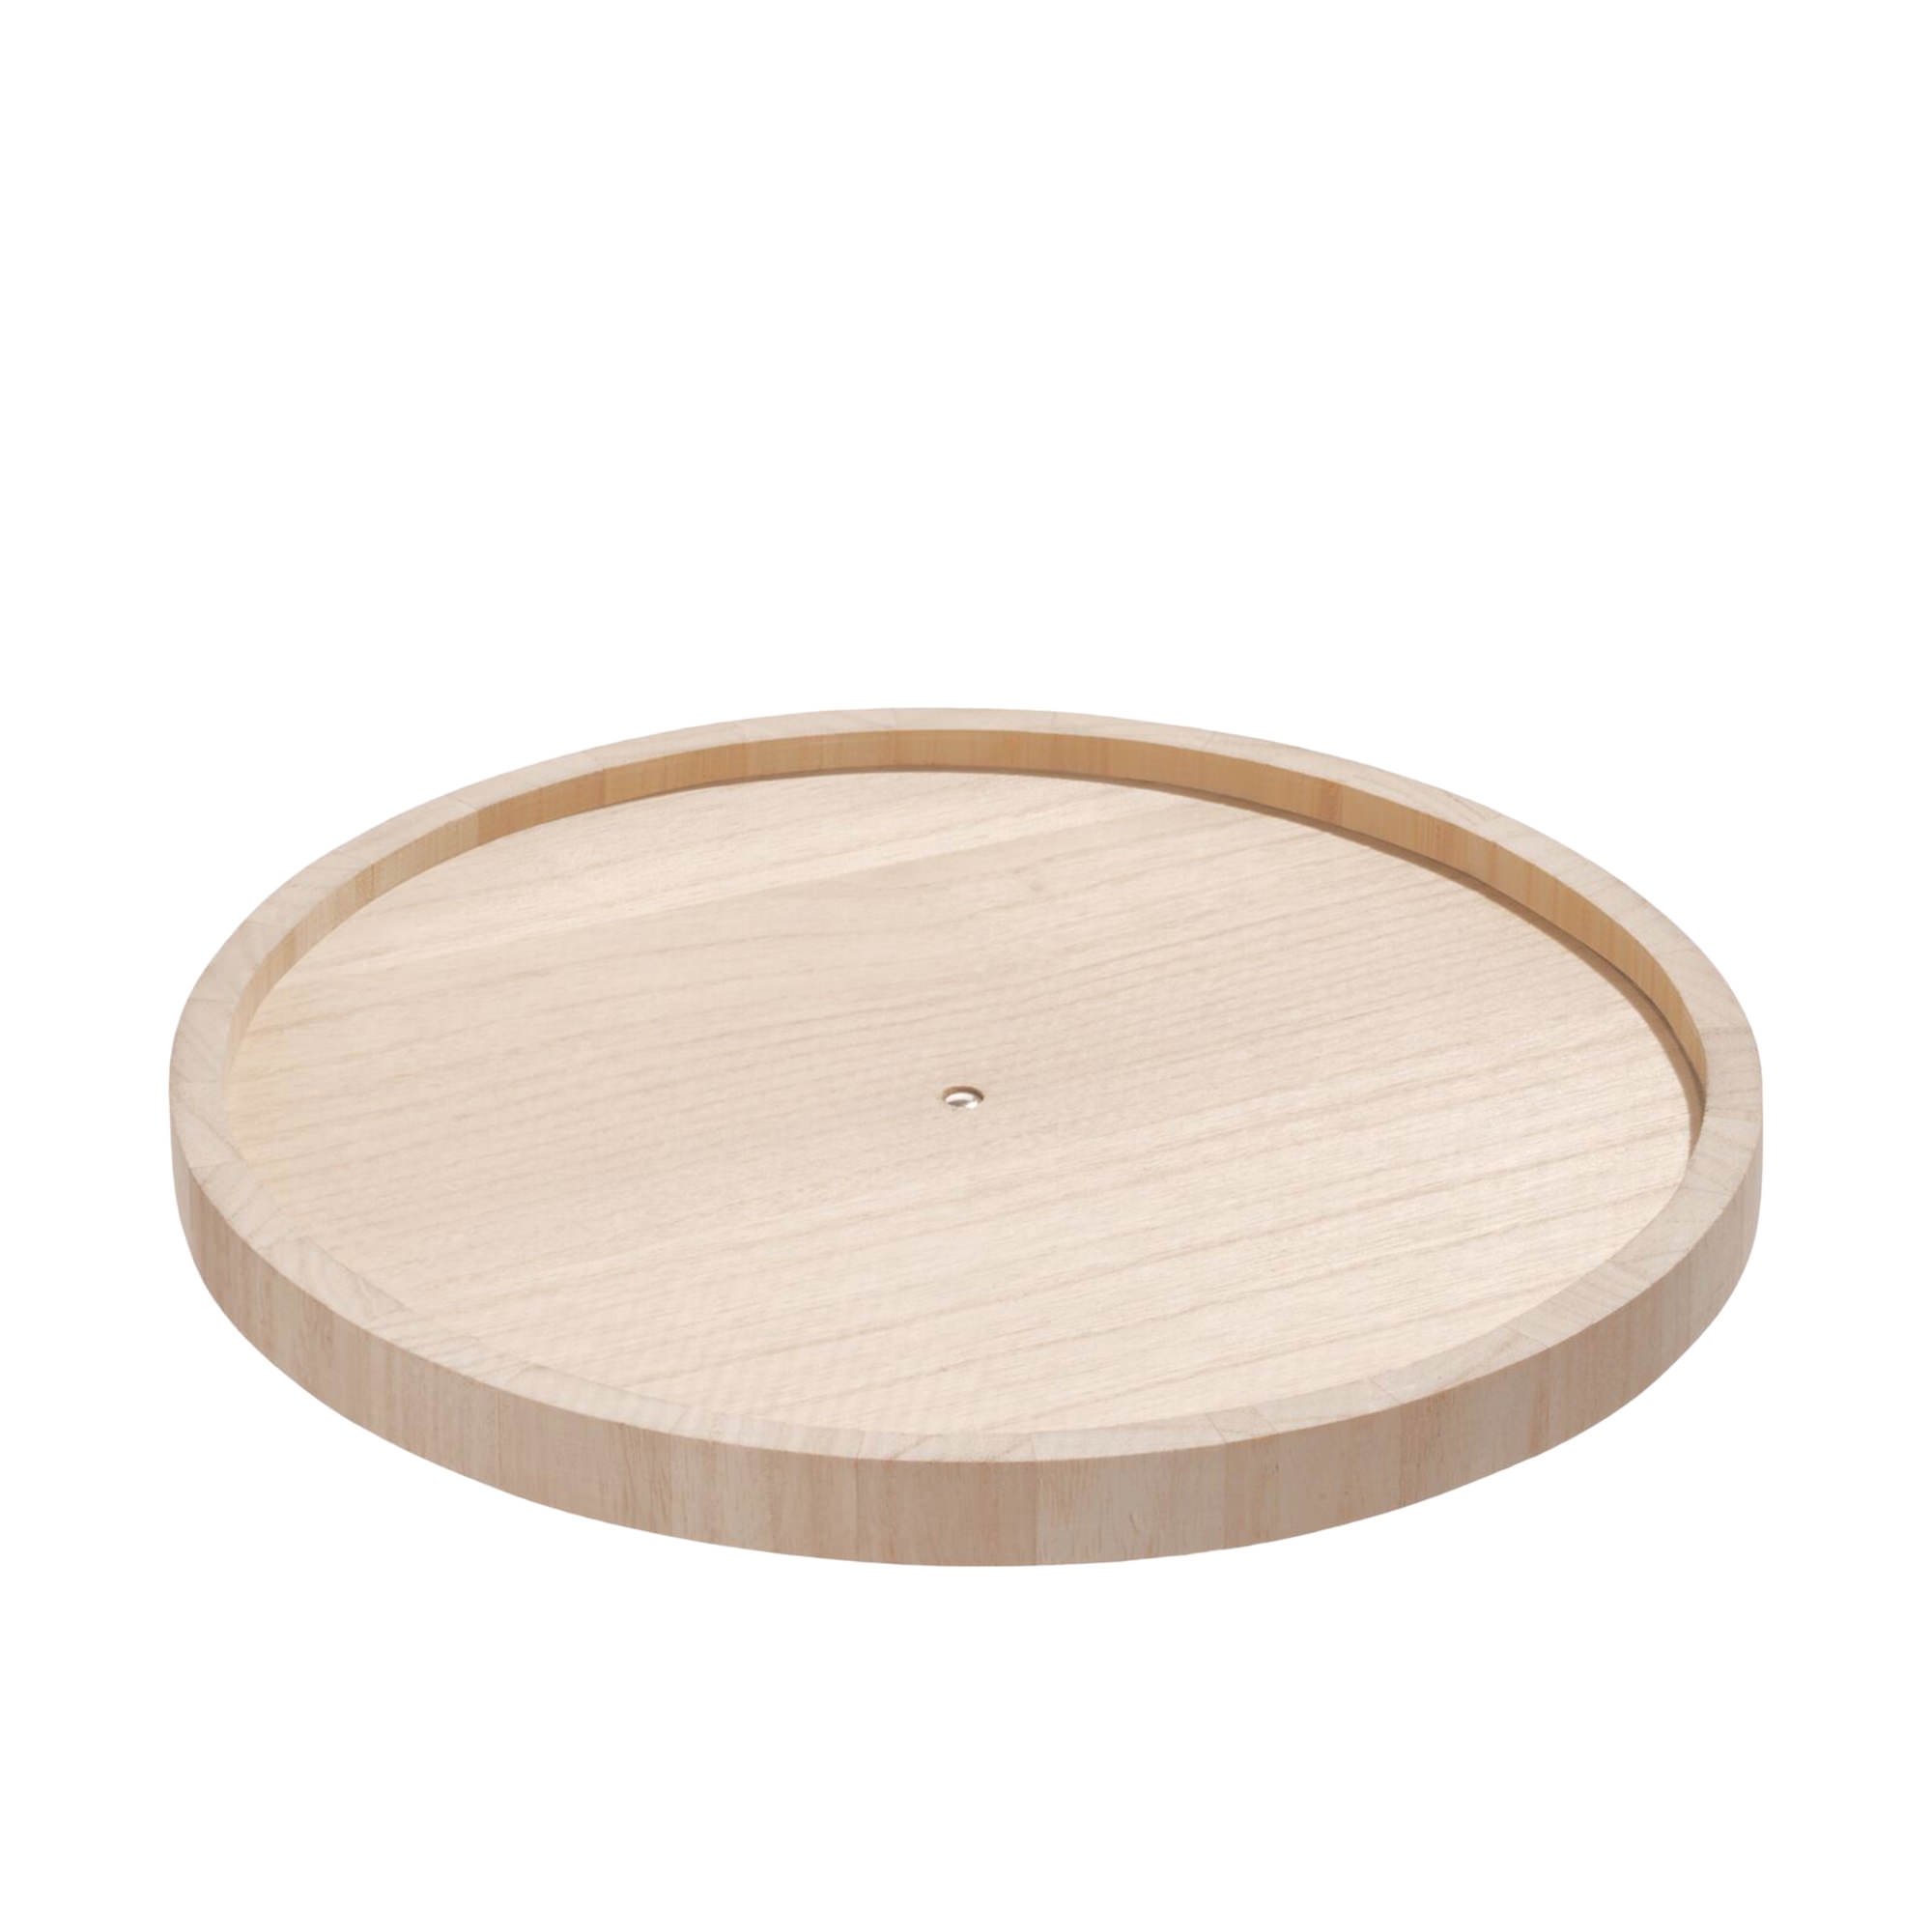 iDesign Eco Wood Turntable 26cm Image 1